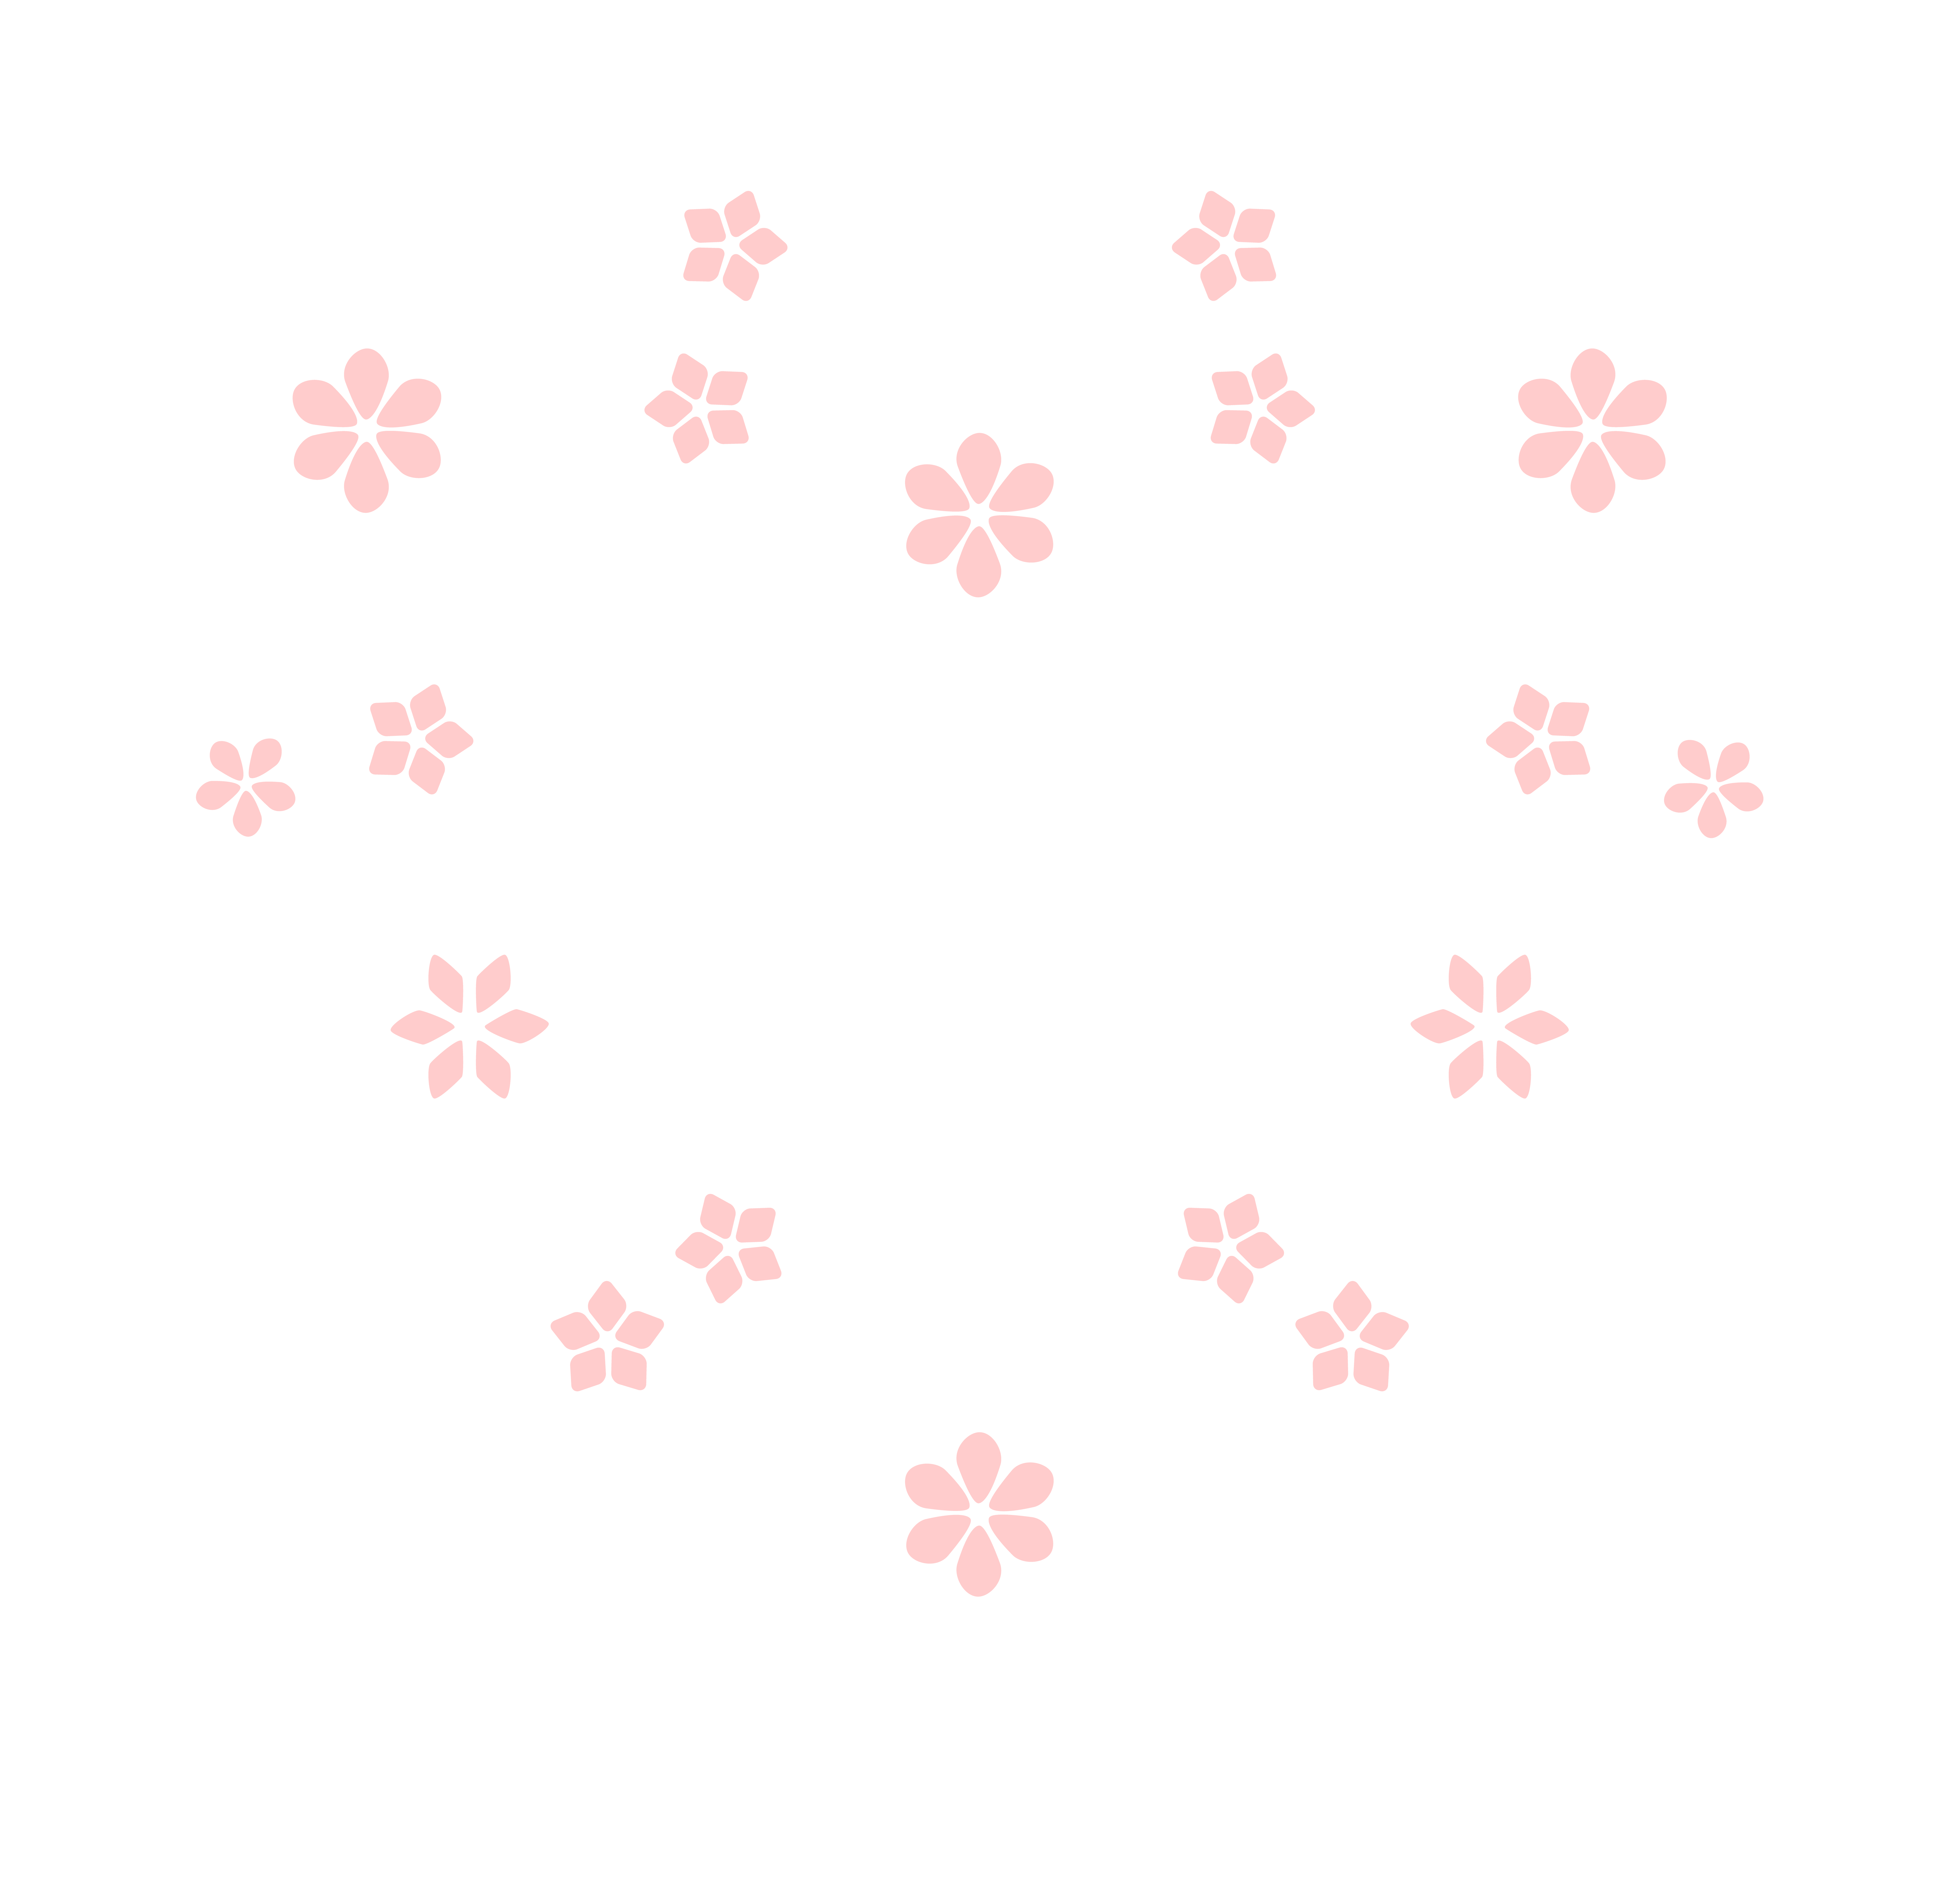 Lace Heart Clip Art PNG Image